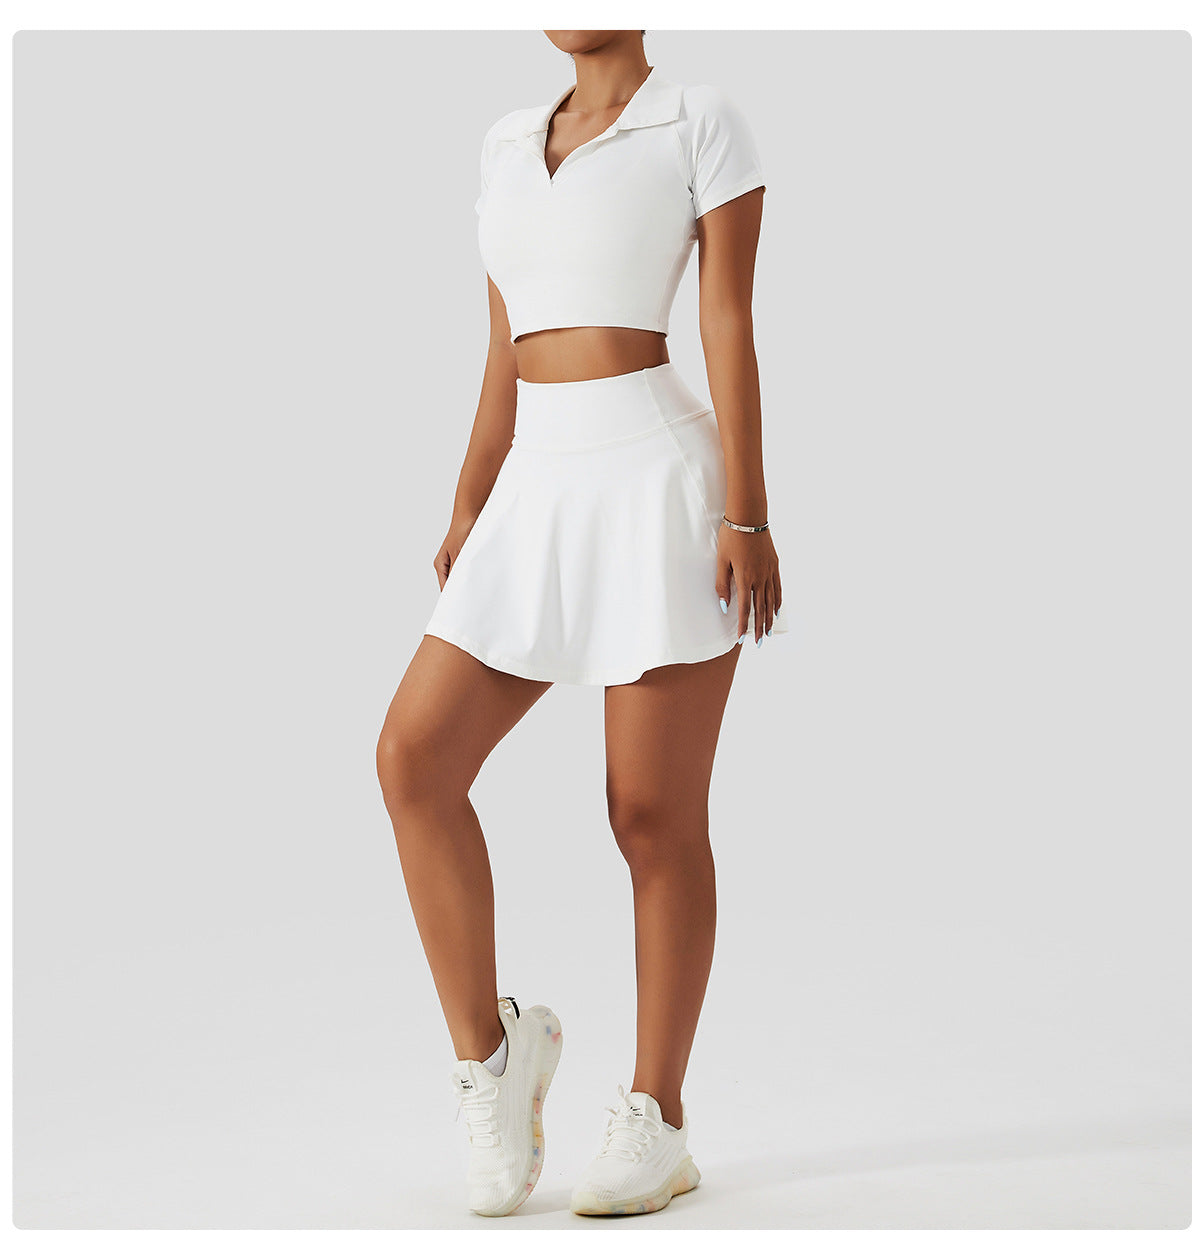 High-Rise Skirt | Women's Tennis Skirt with Side Pockets - fourteenyoga